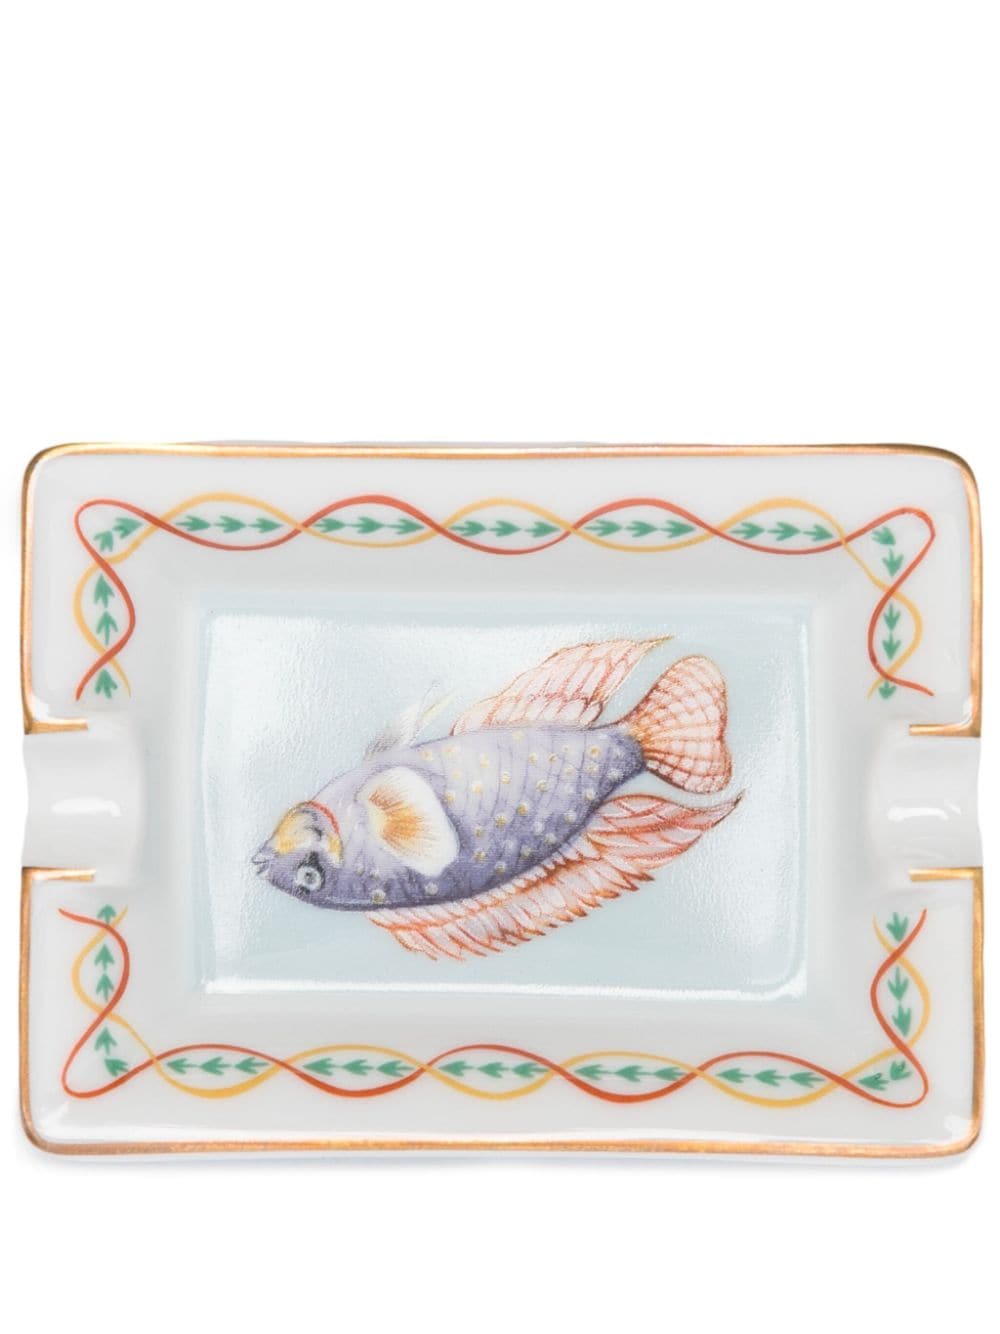 Hermès Pre-Owned 1980s small fish-print porcelain ashtray (7.8cm x 5.8cm) - White von Hermès Pre-Owned